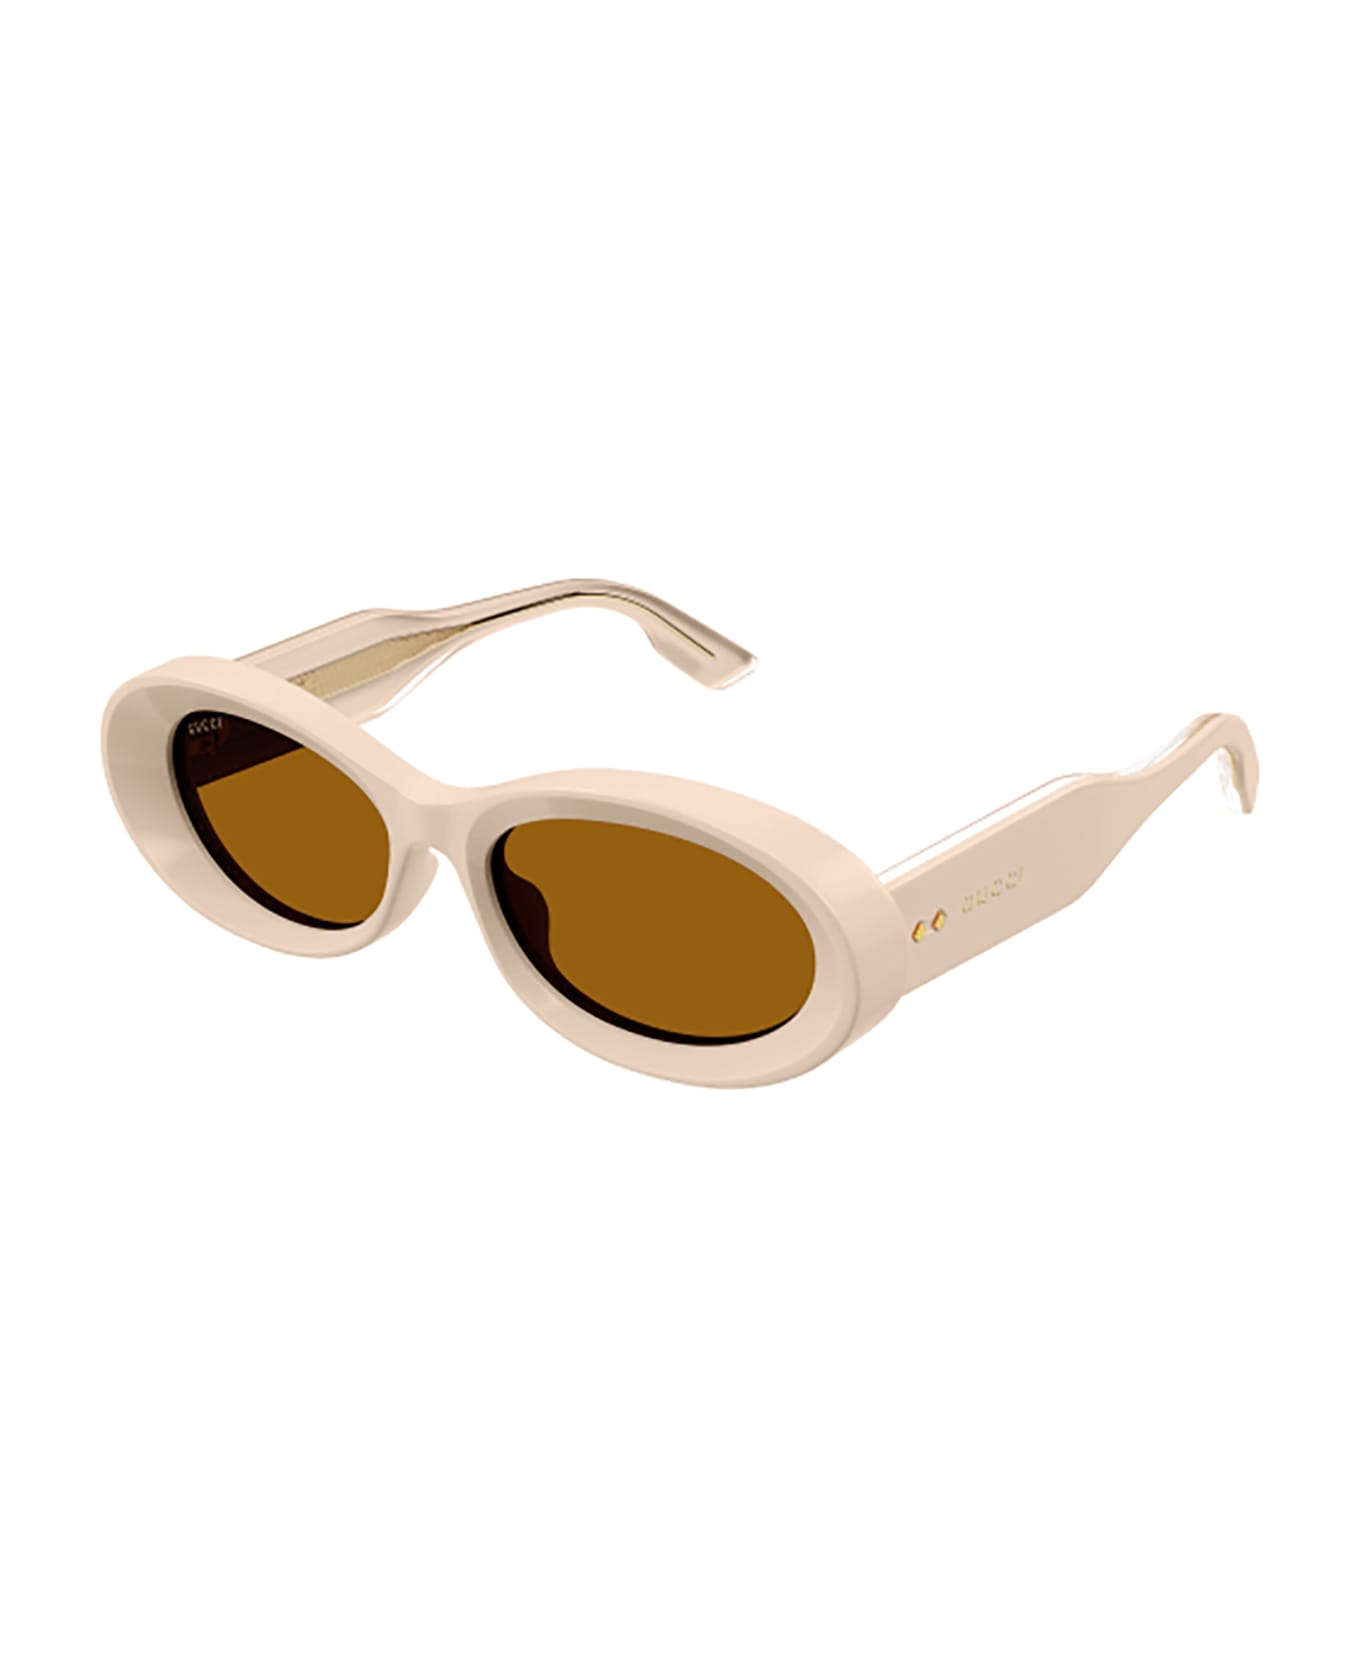 Gucci Eyewear GG1527S Sunglasses - Beige Beige Brown